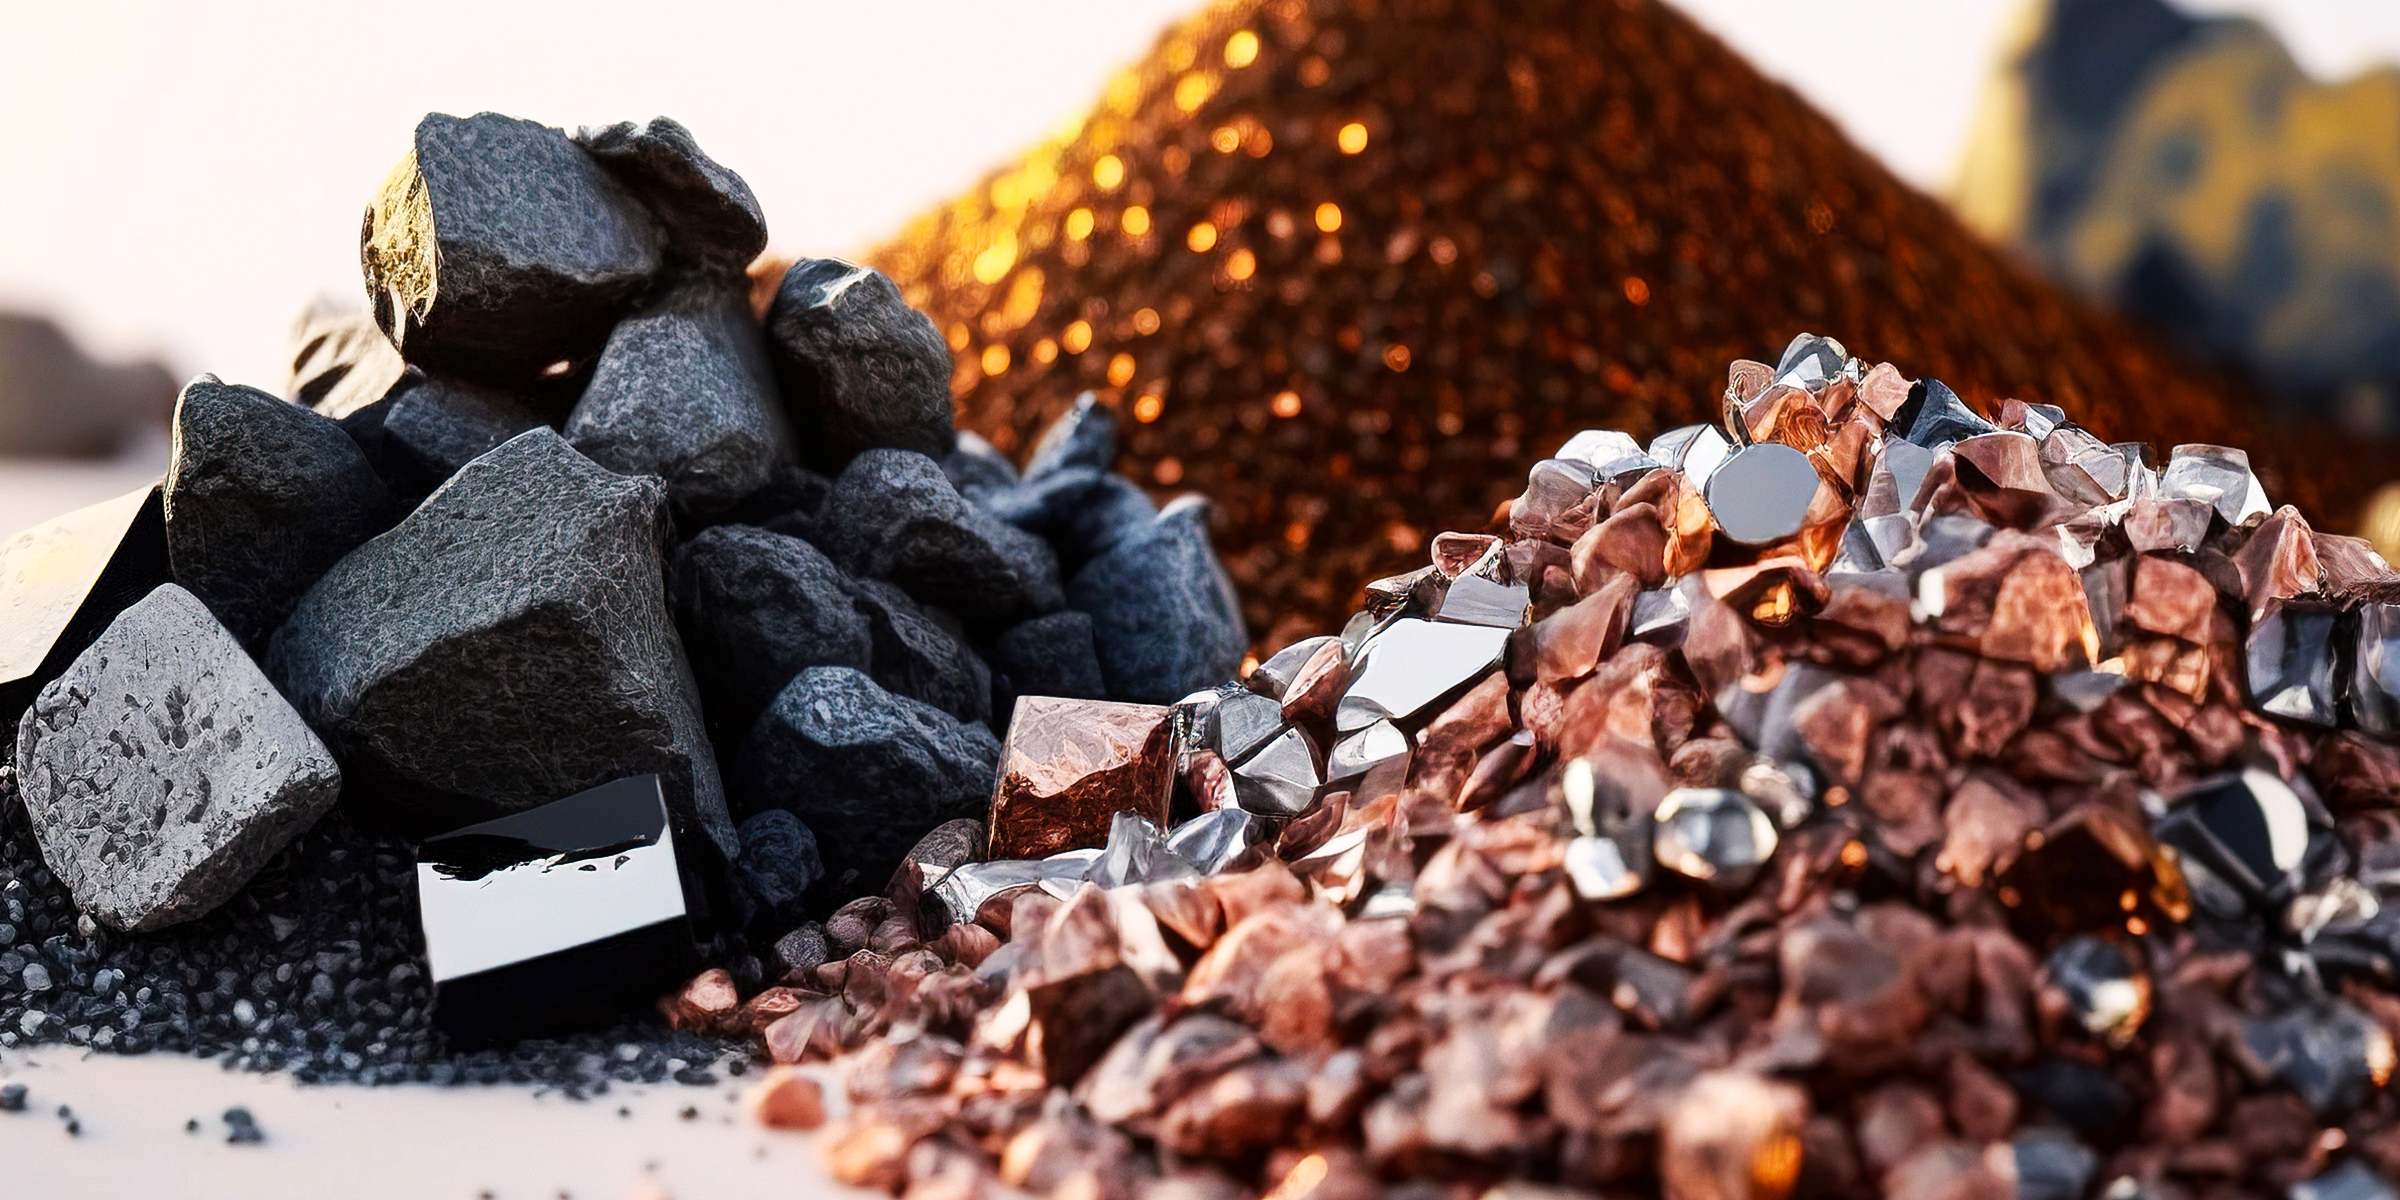 Assorted rocks | Source: Shutterstock